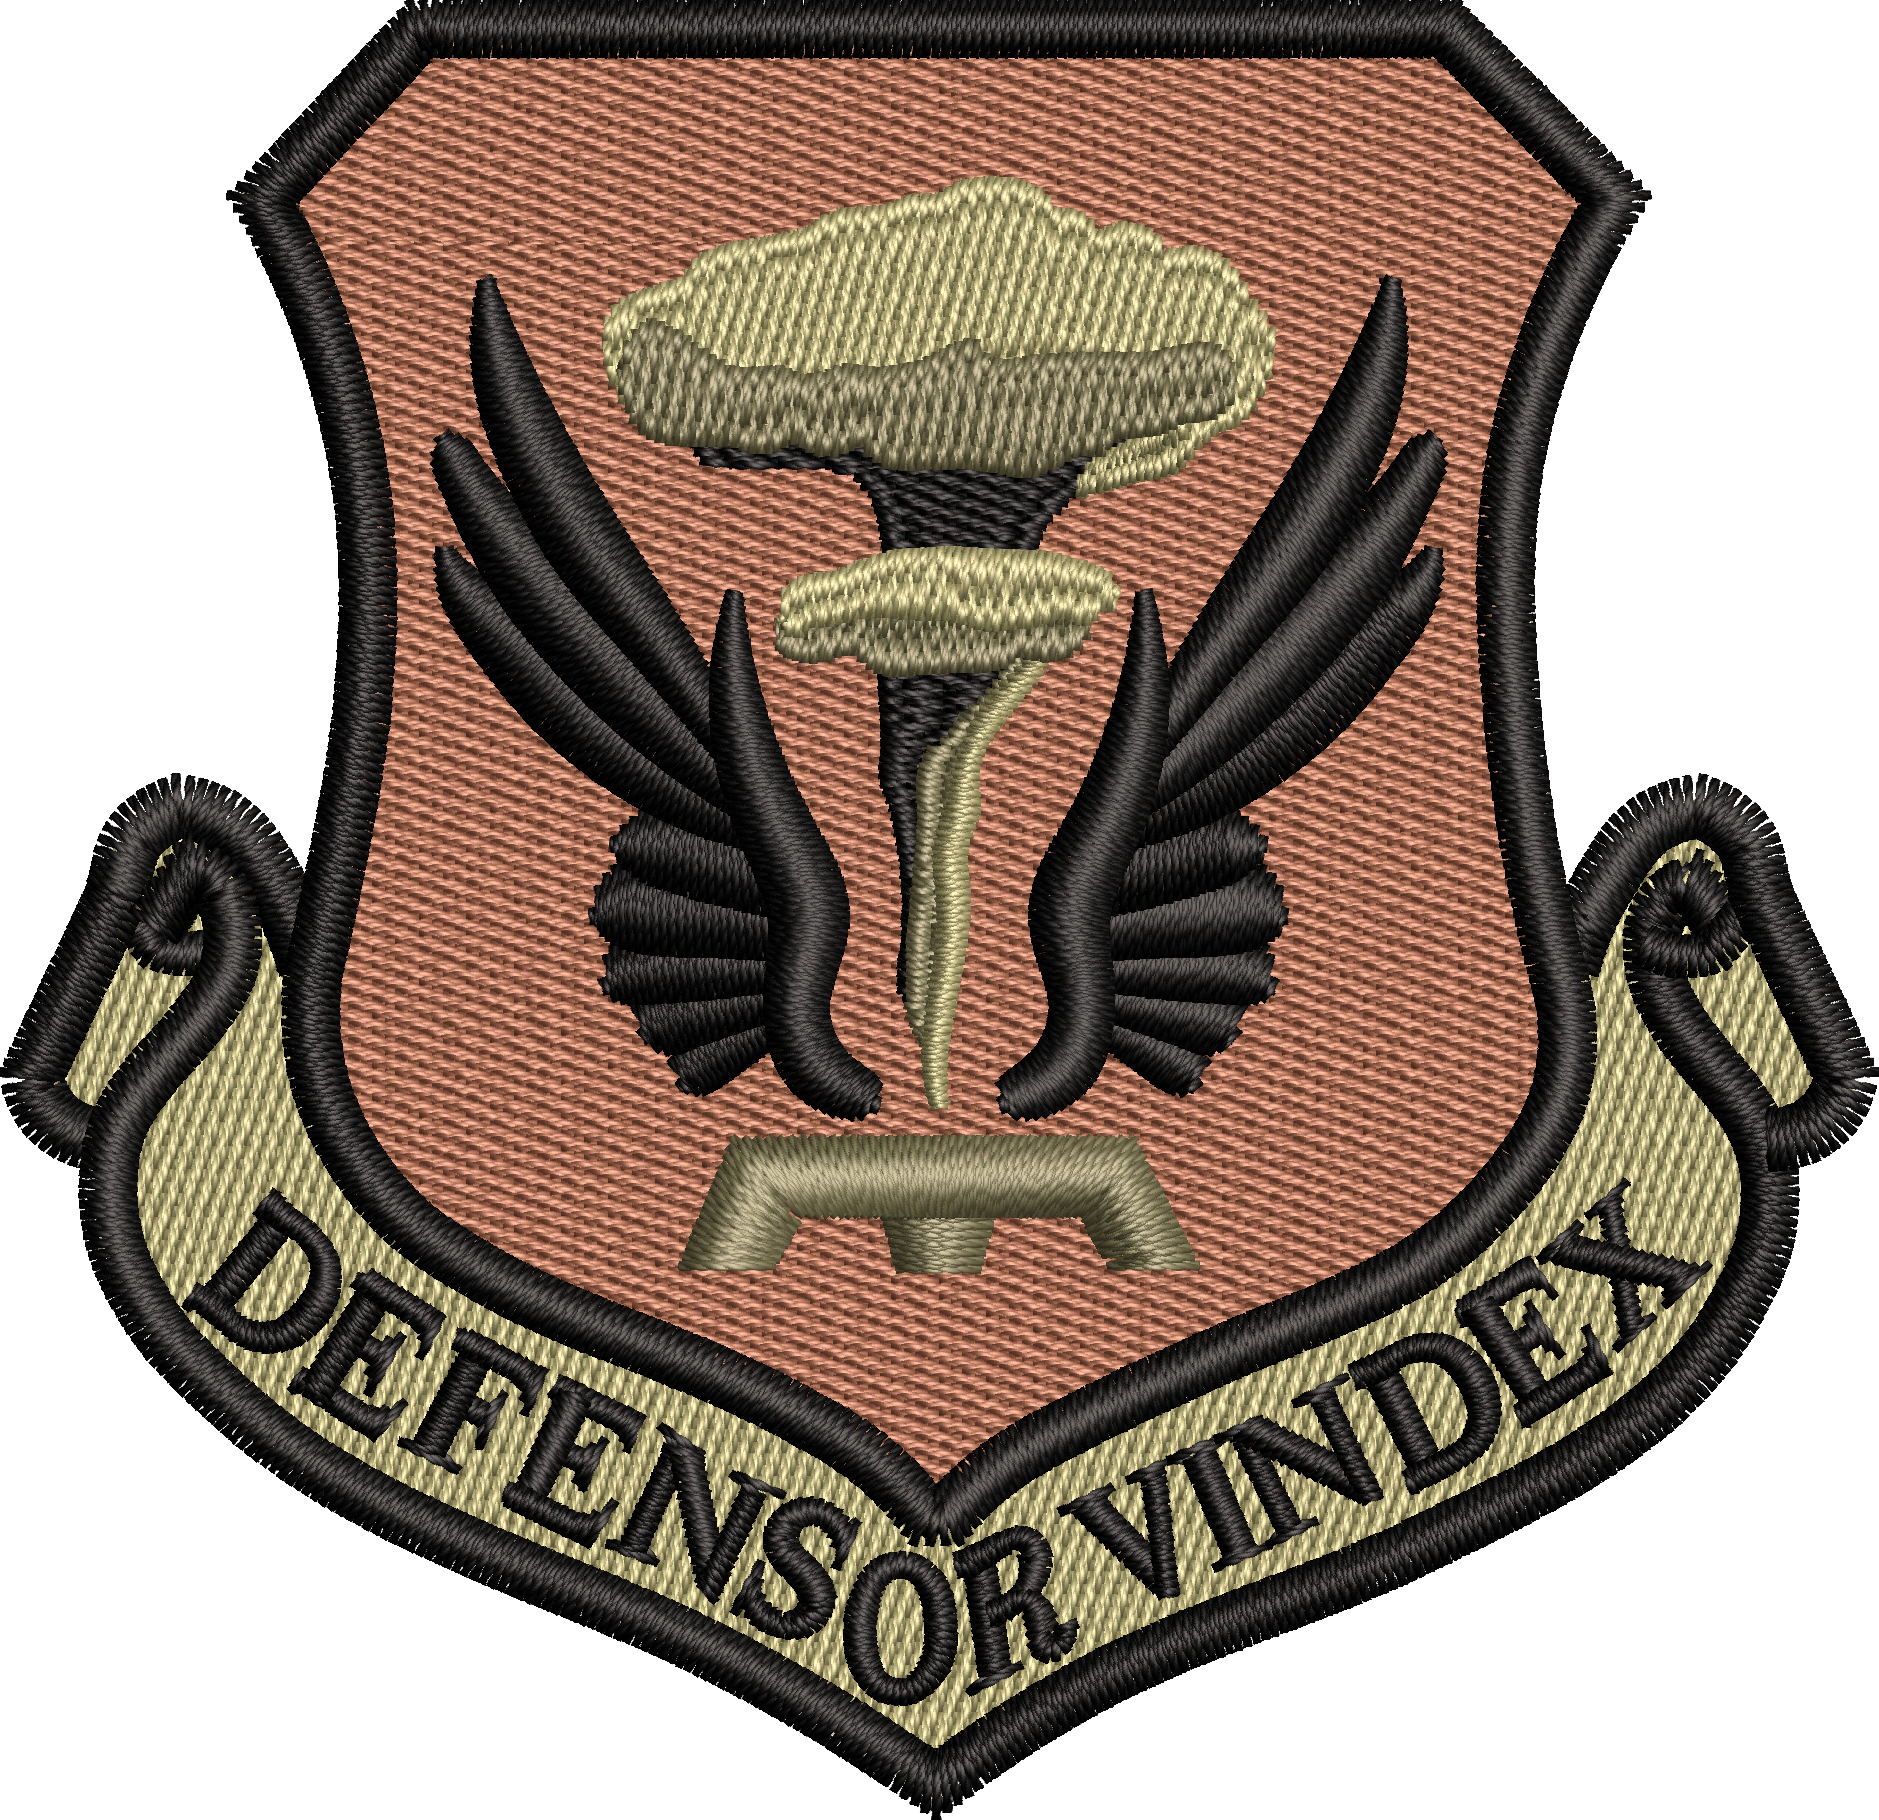 509th Bombardment Wing (DEFENSOR VINDEX) - OCP patch